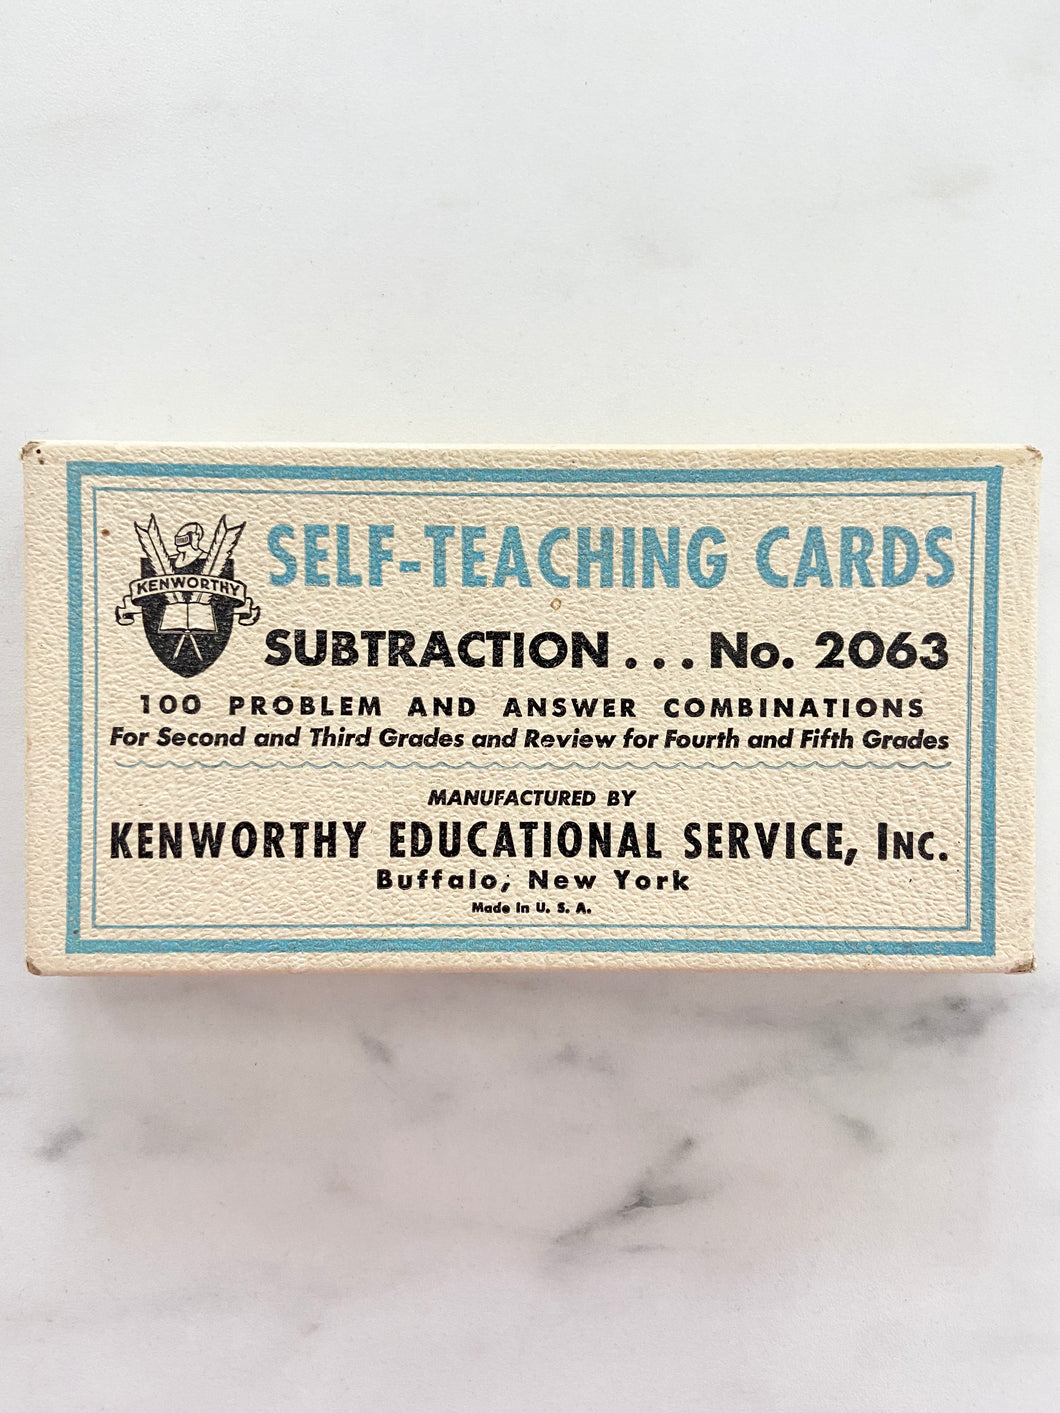 Vintage self teaching math flash cards